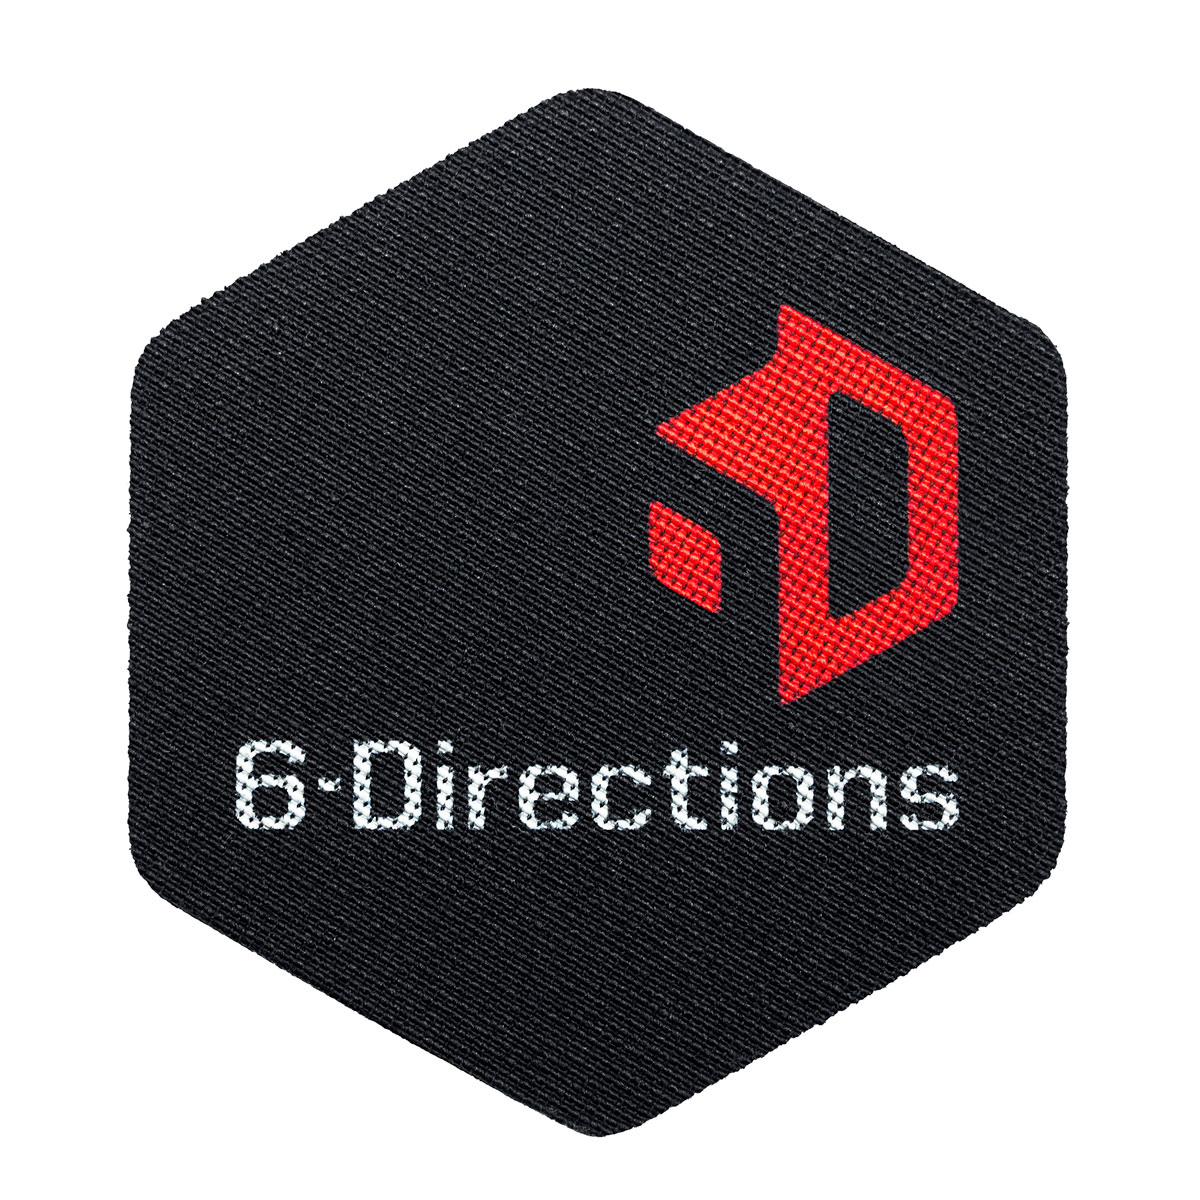 6-Directions 6D Sliders